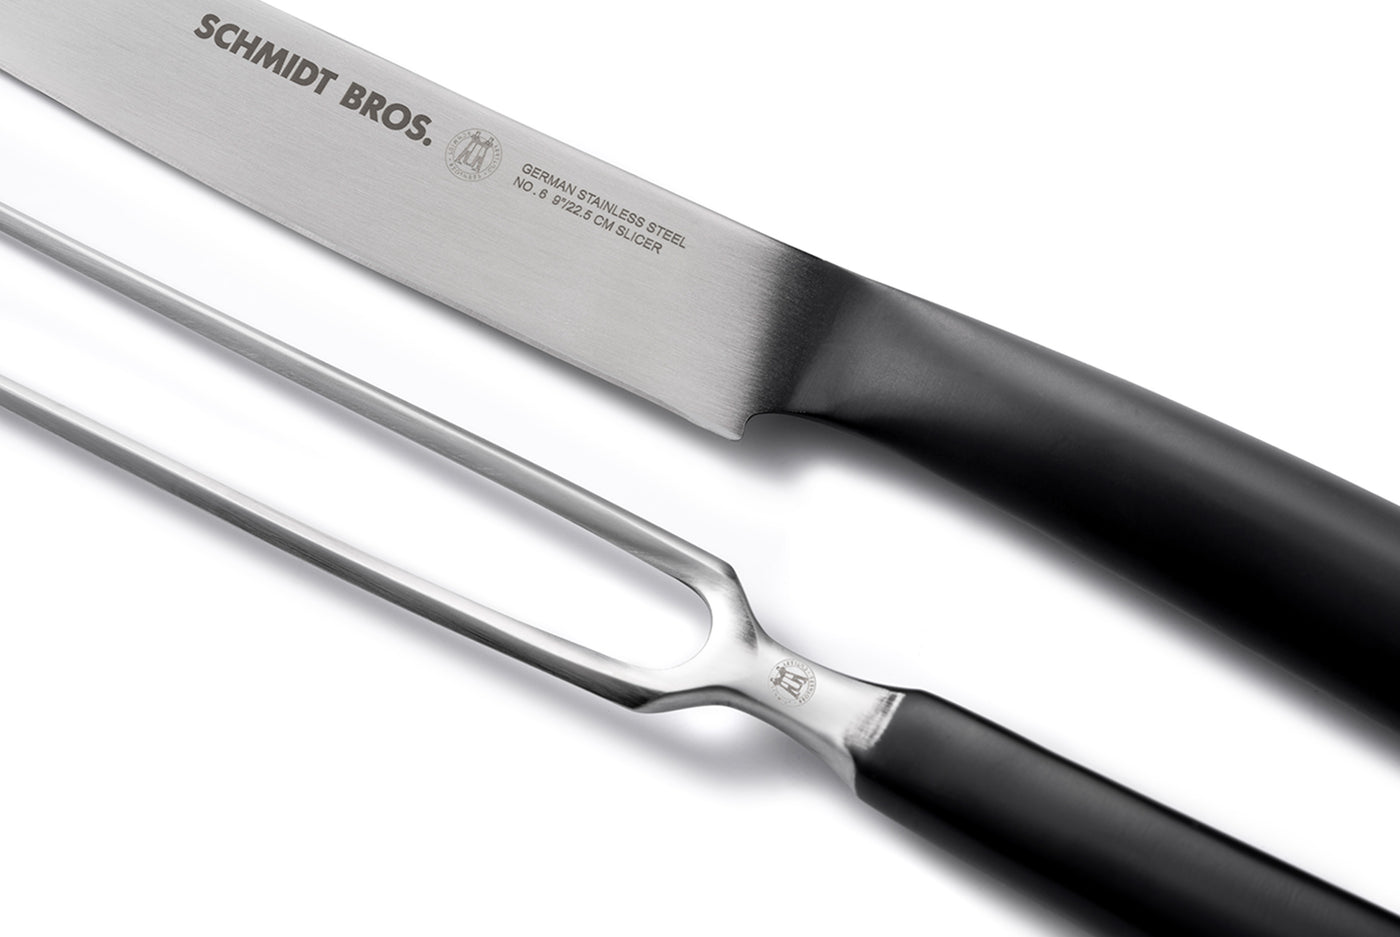 Schmidt Bros Steel Cut No. 9 Knife 7 Slicer Stainless Professional Grade